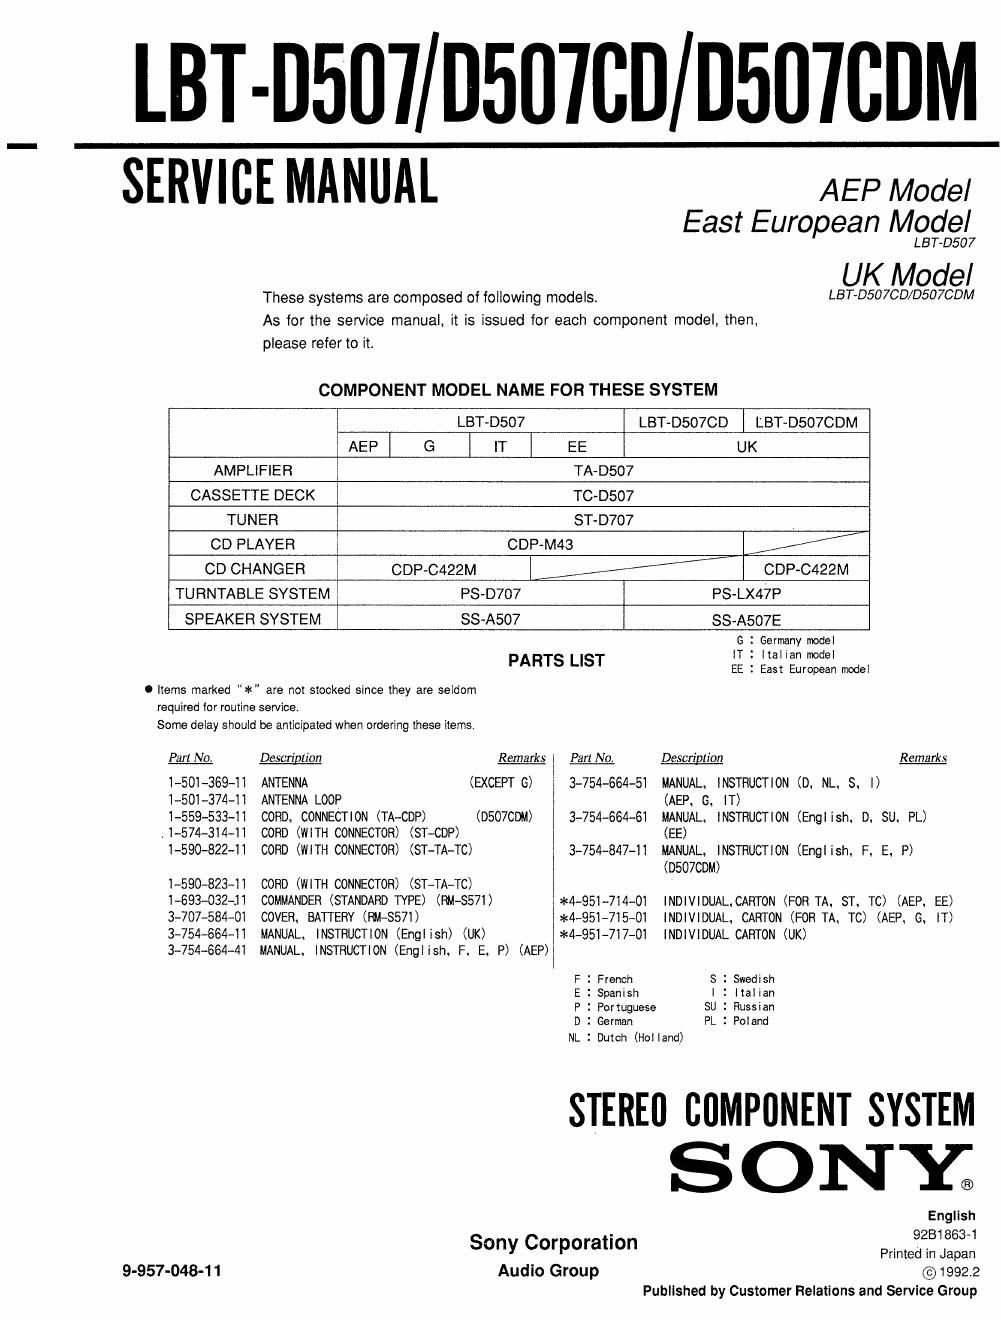 sony lbt d 507 cd service manual